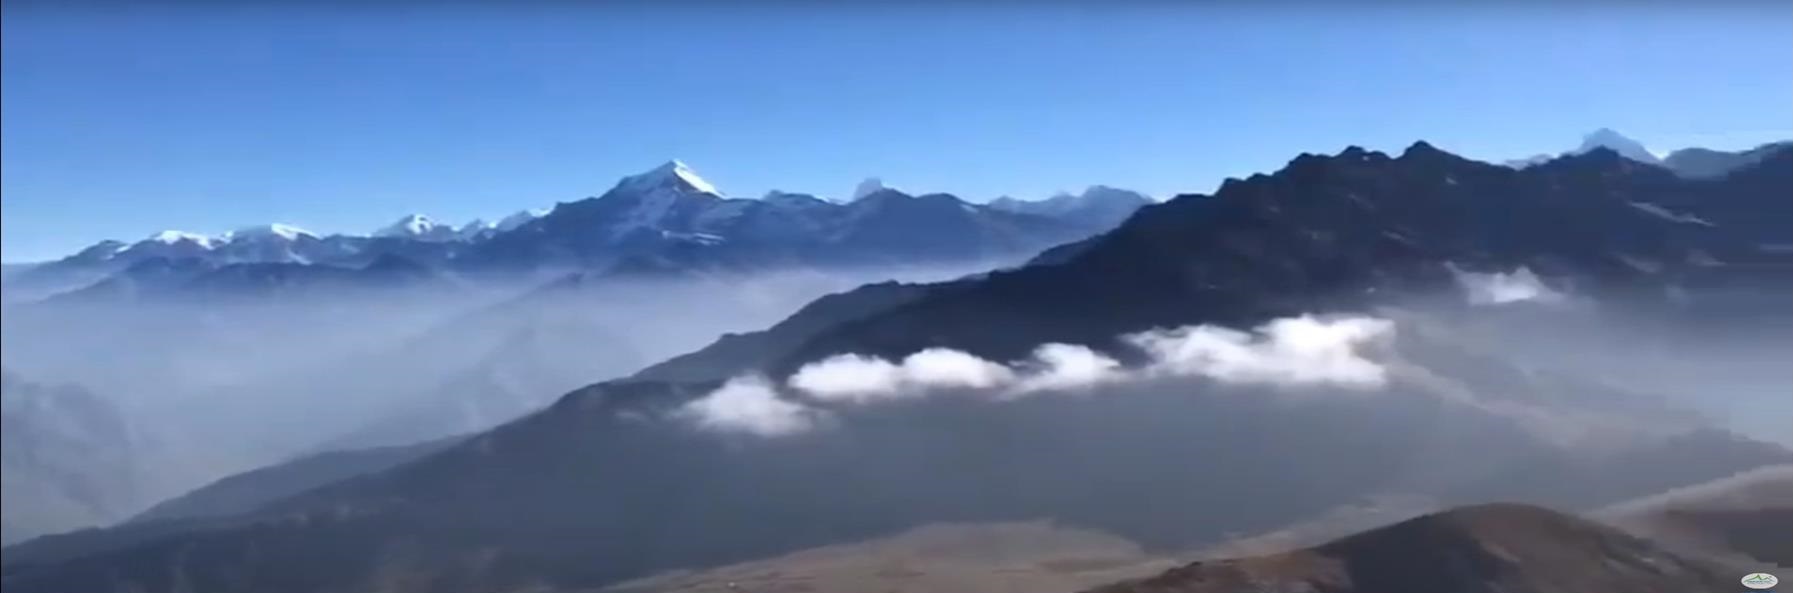  Pangarchula Peak Trek introduction 